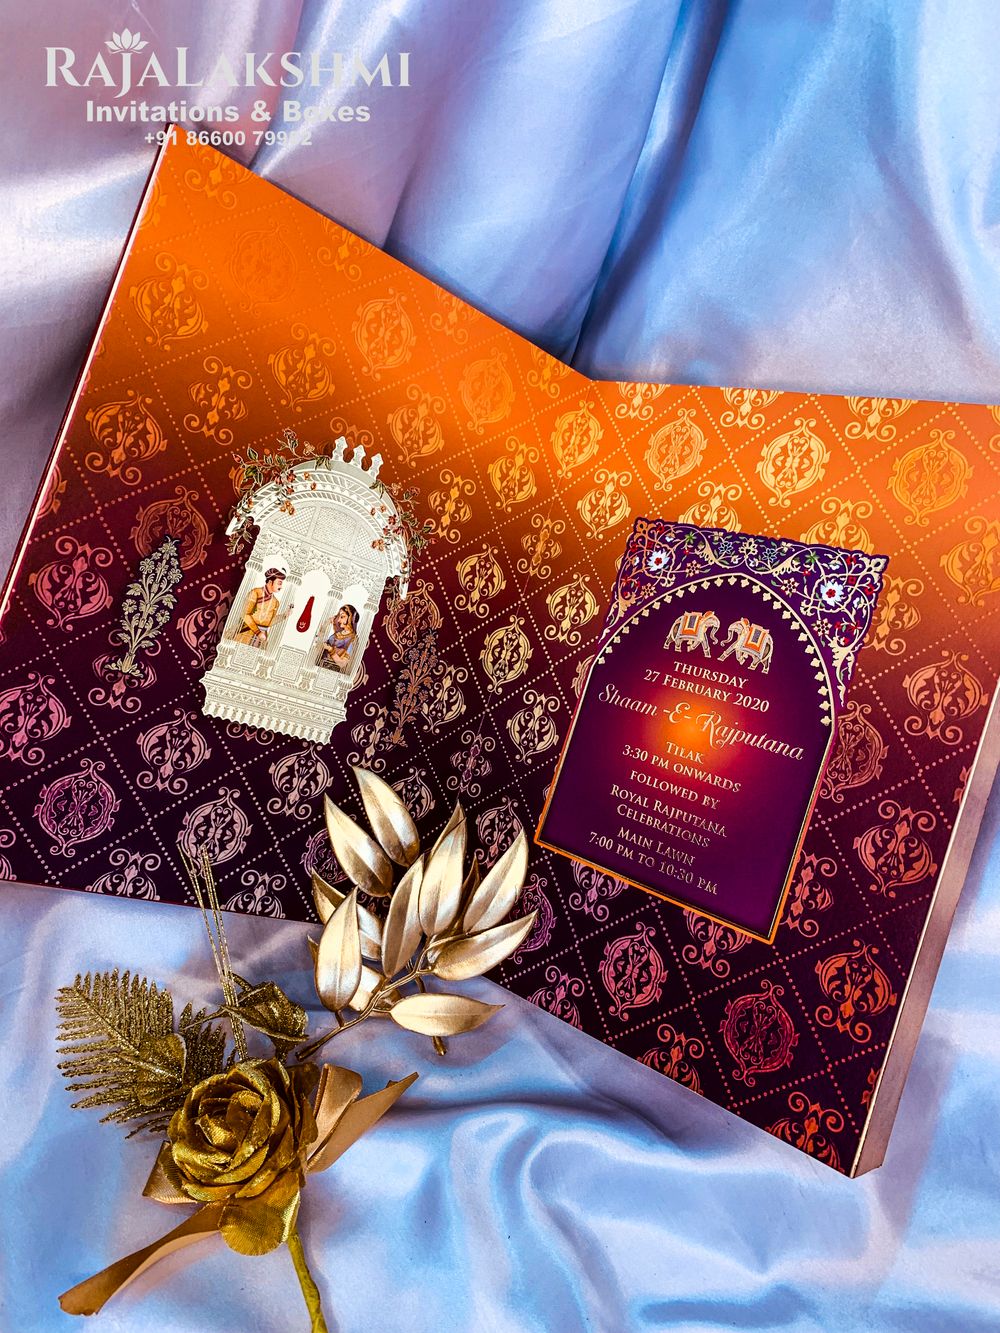 Photo By Sri Raja Lakshmi Wedding Cards - Invitations